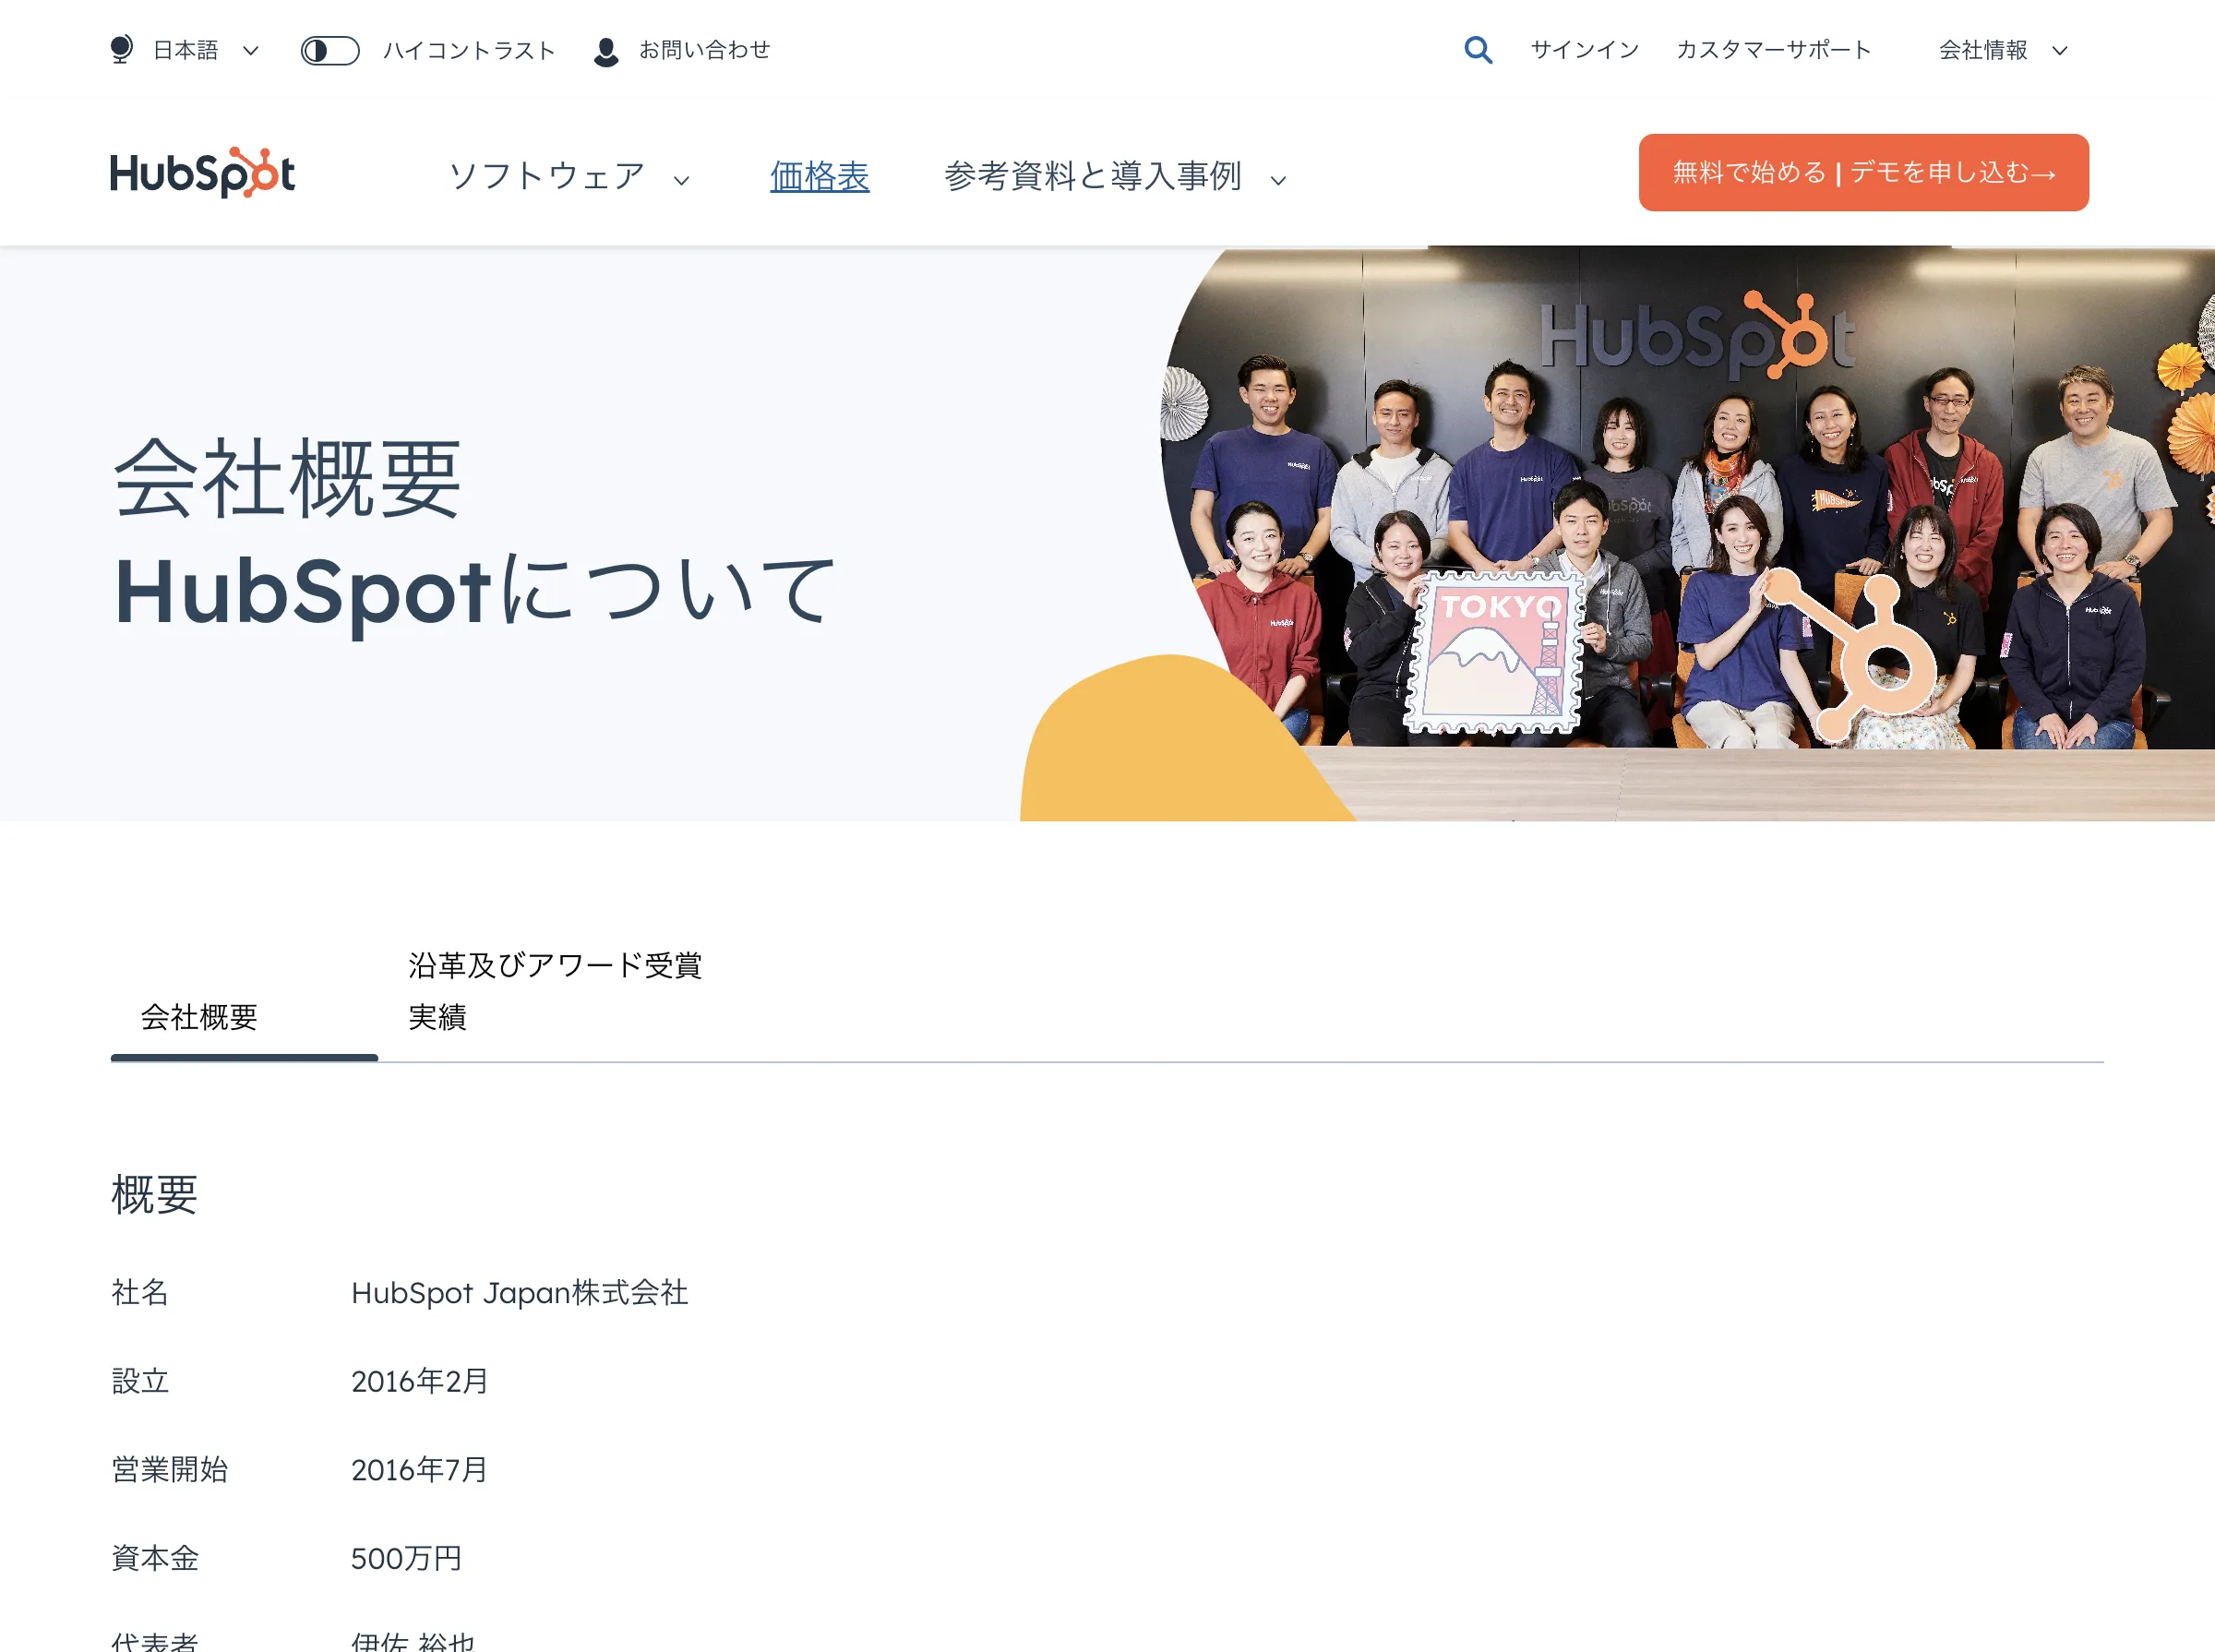 HubSpot Japan株式会社